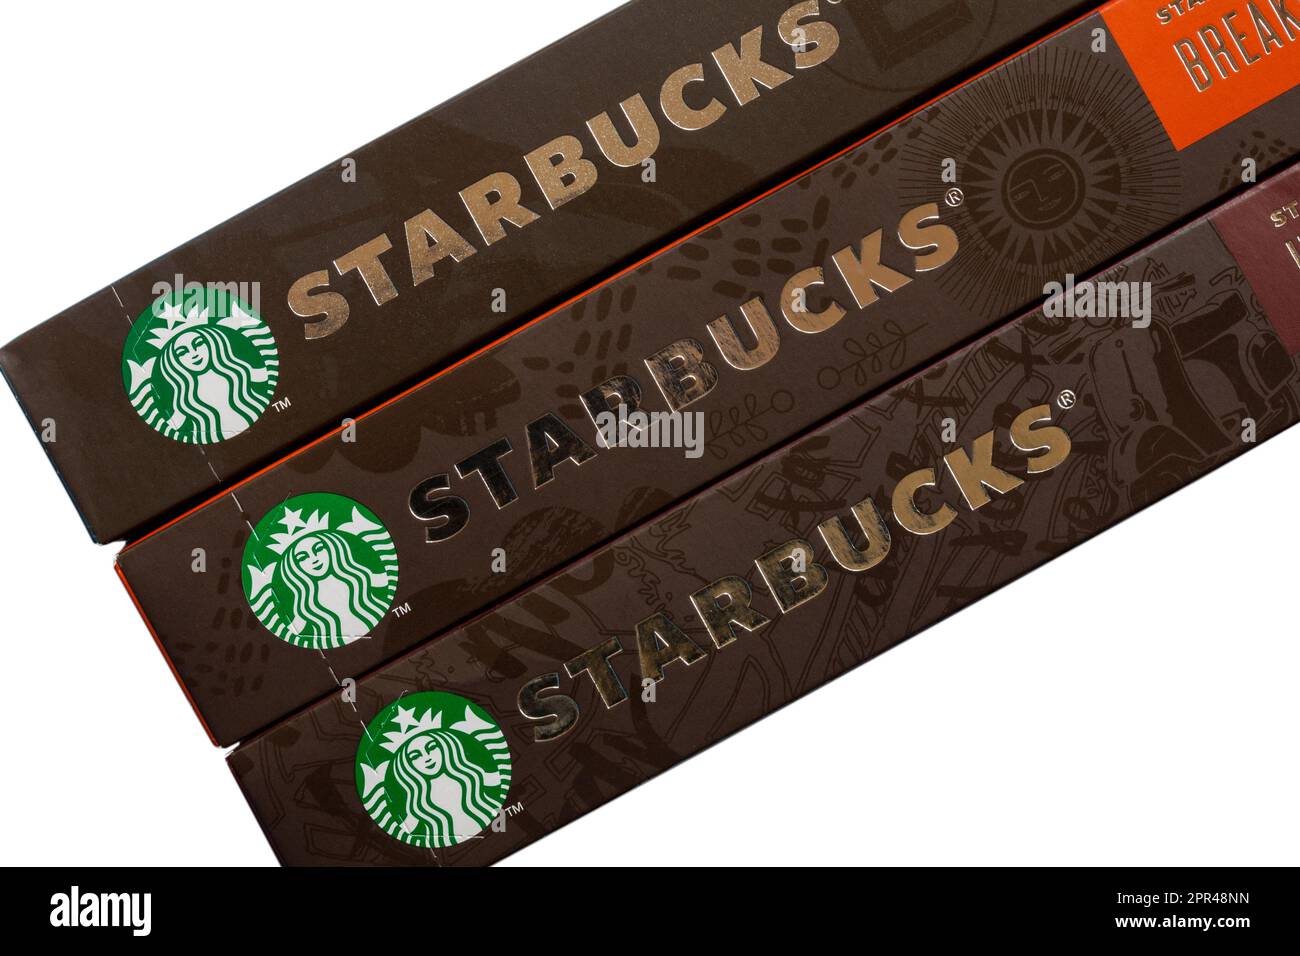 Starbucks logo on boxes of Starbucks coffee capsules by Nespresso Stock Photo